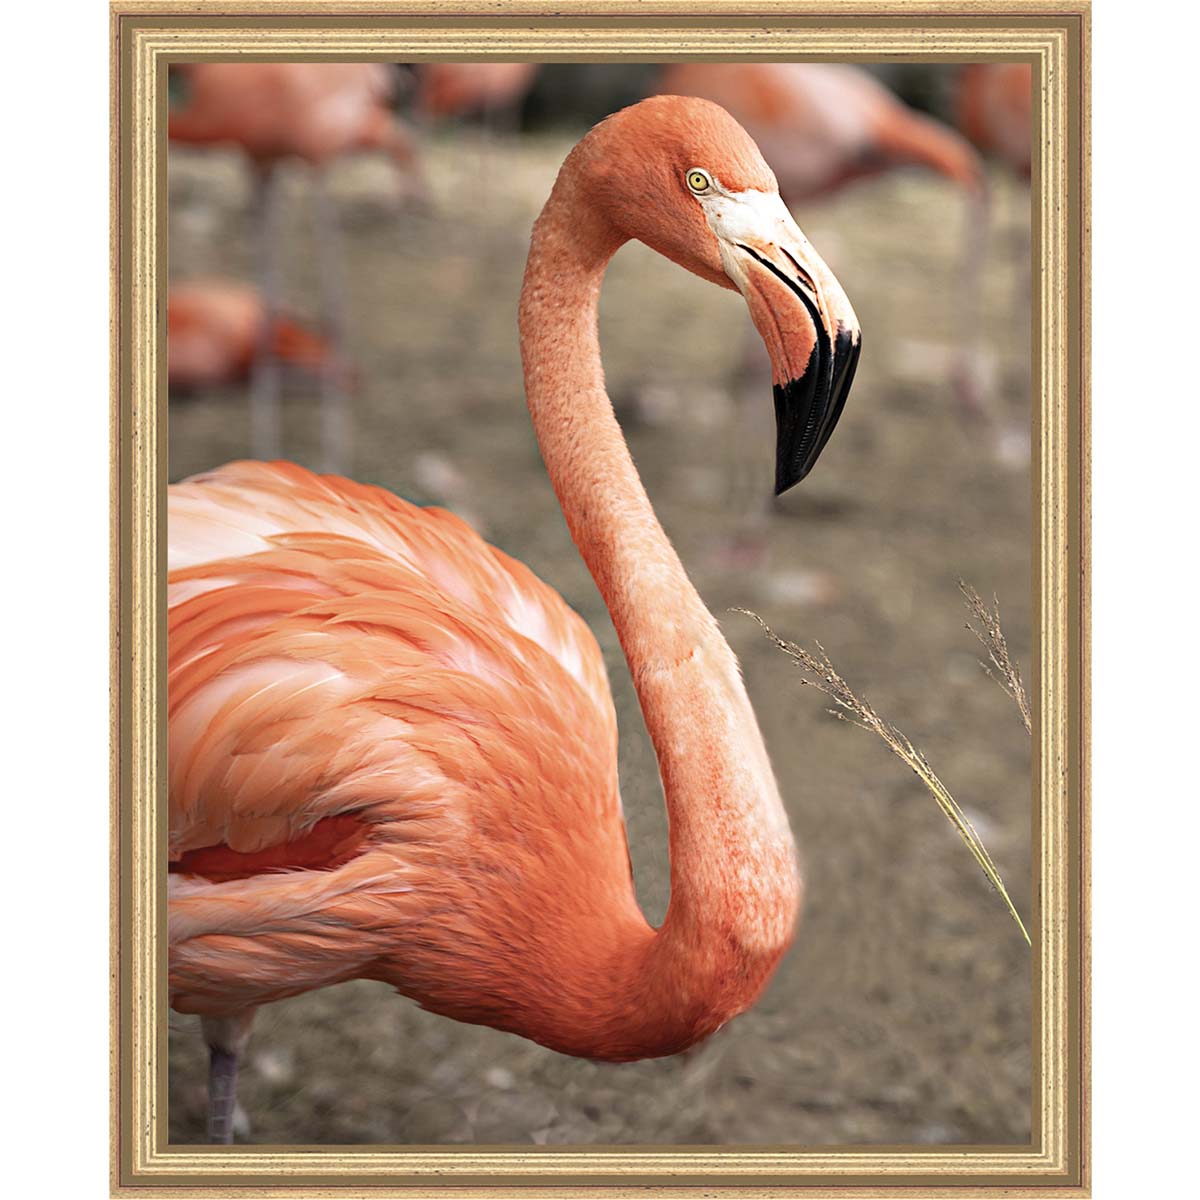 Flamingo Canvas Painting Kit